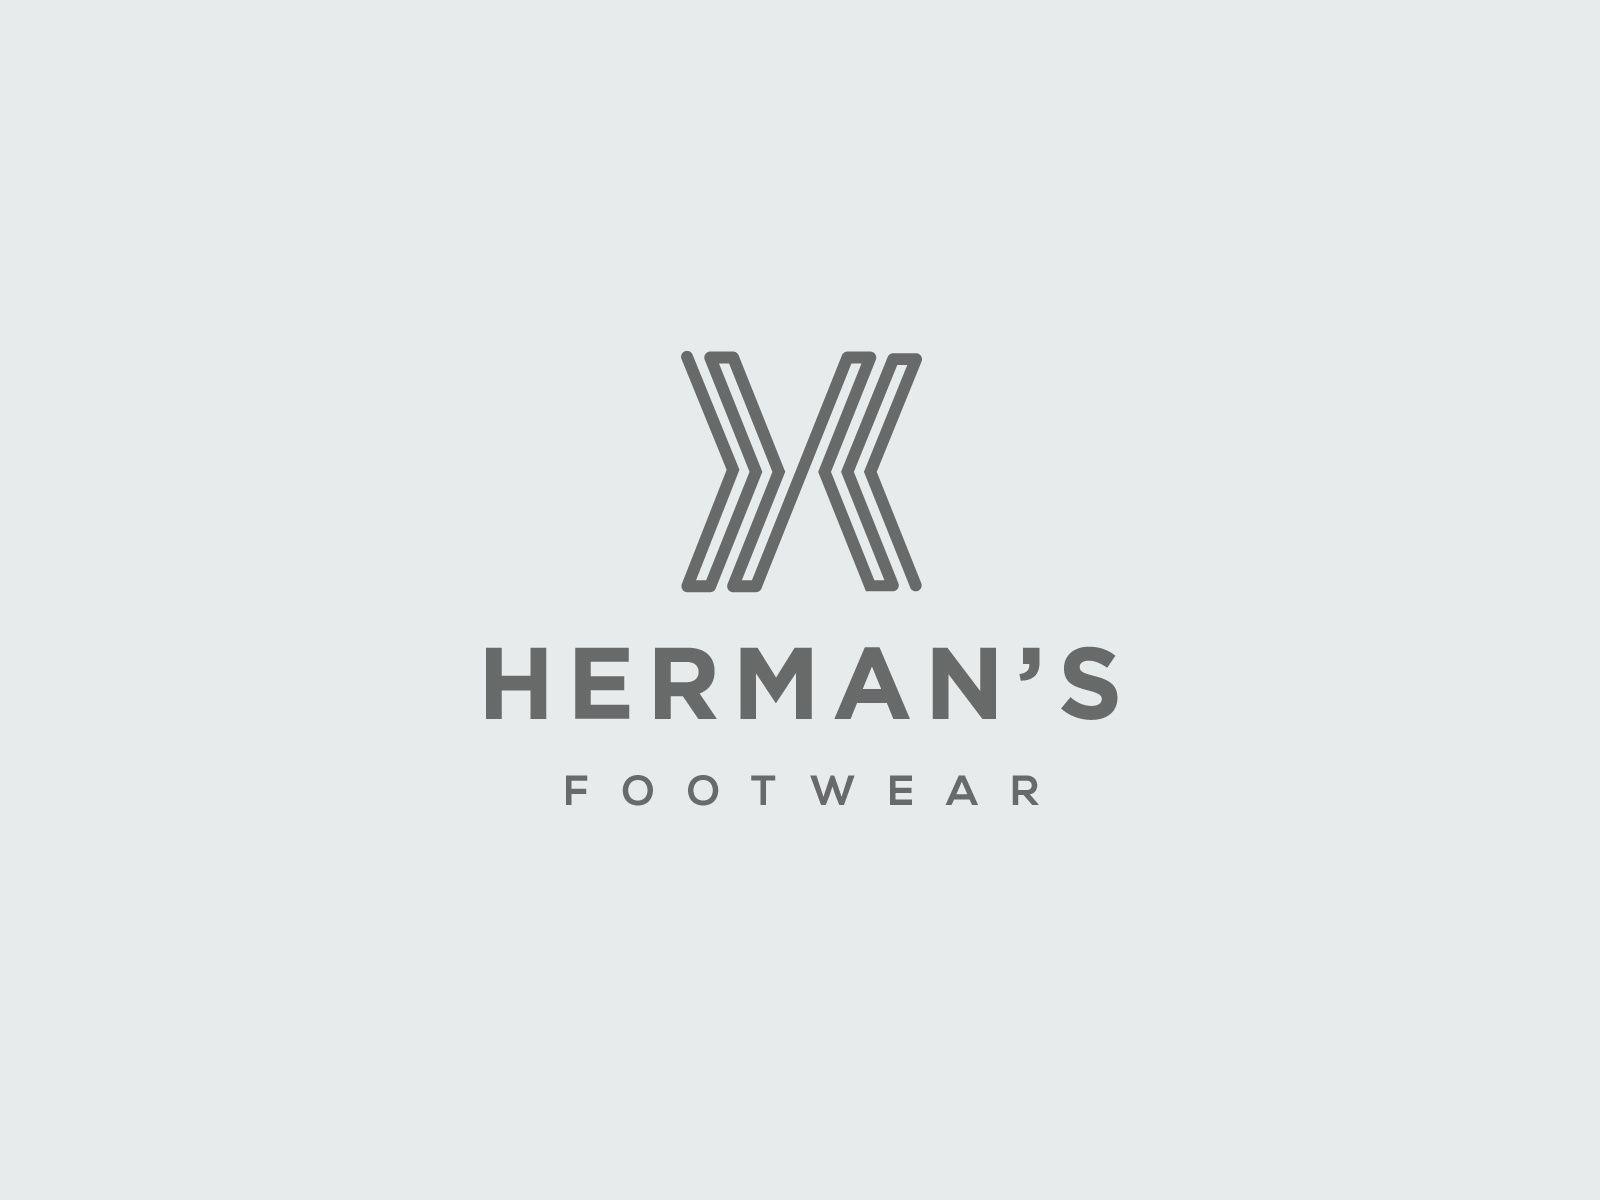 Herman Logo - Herman's Footwear Logo by Filippo Borghetti on Dribbble